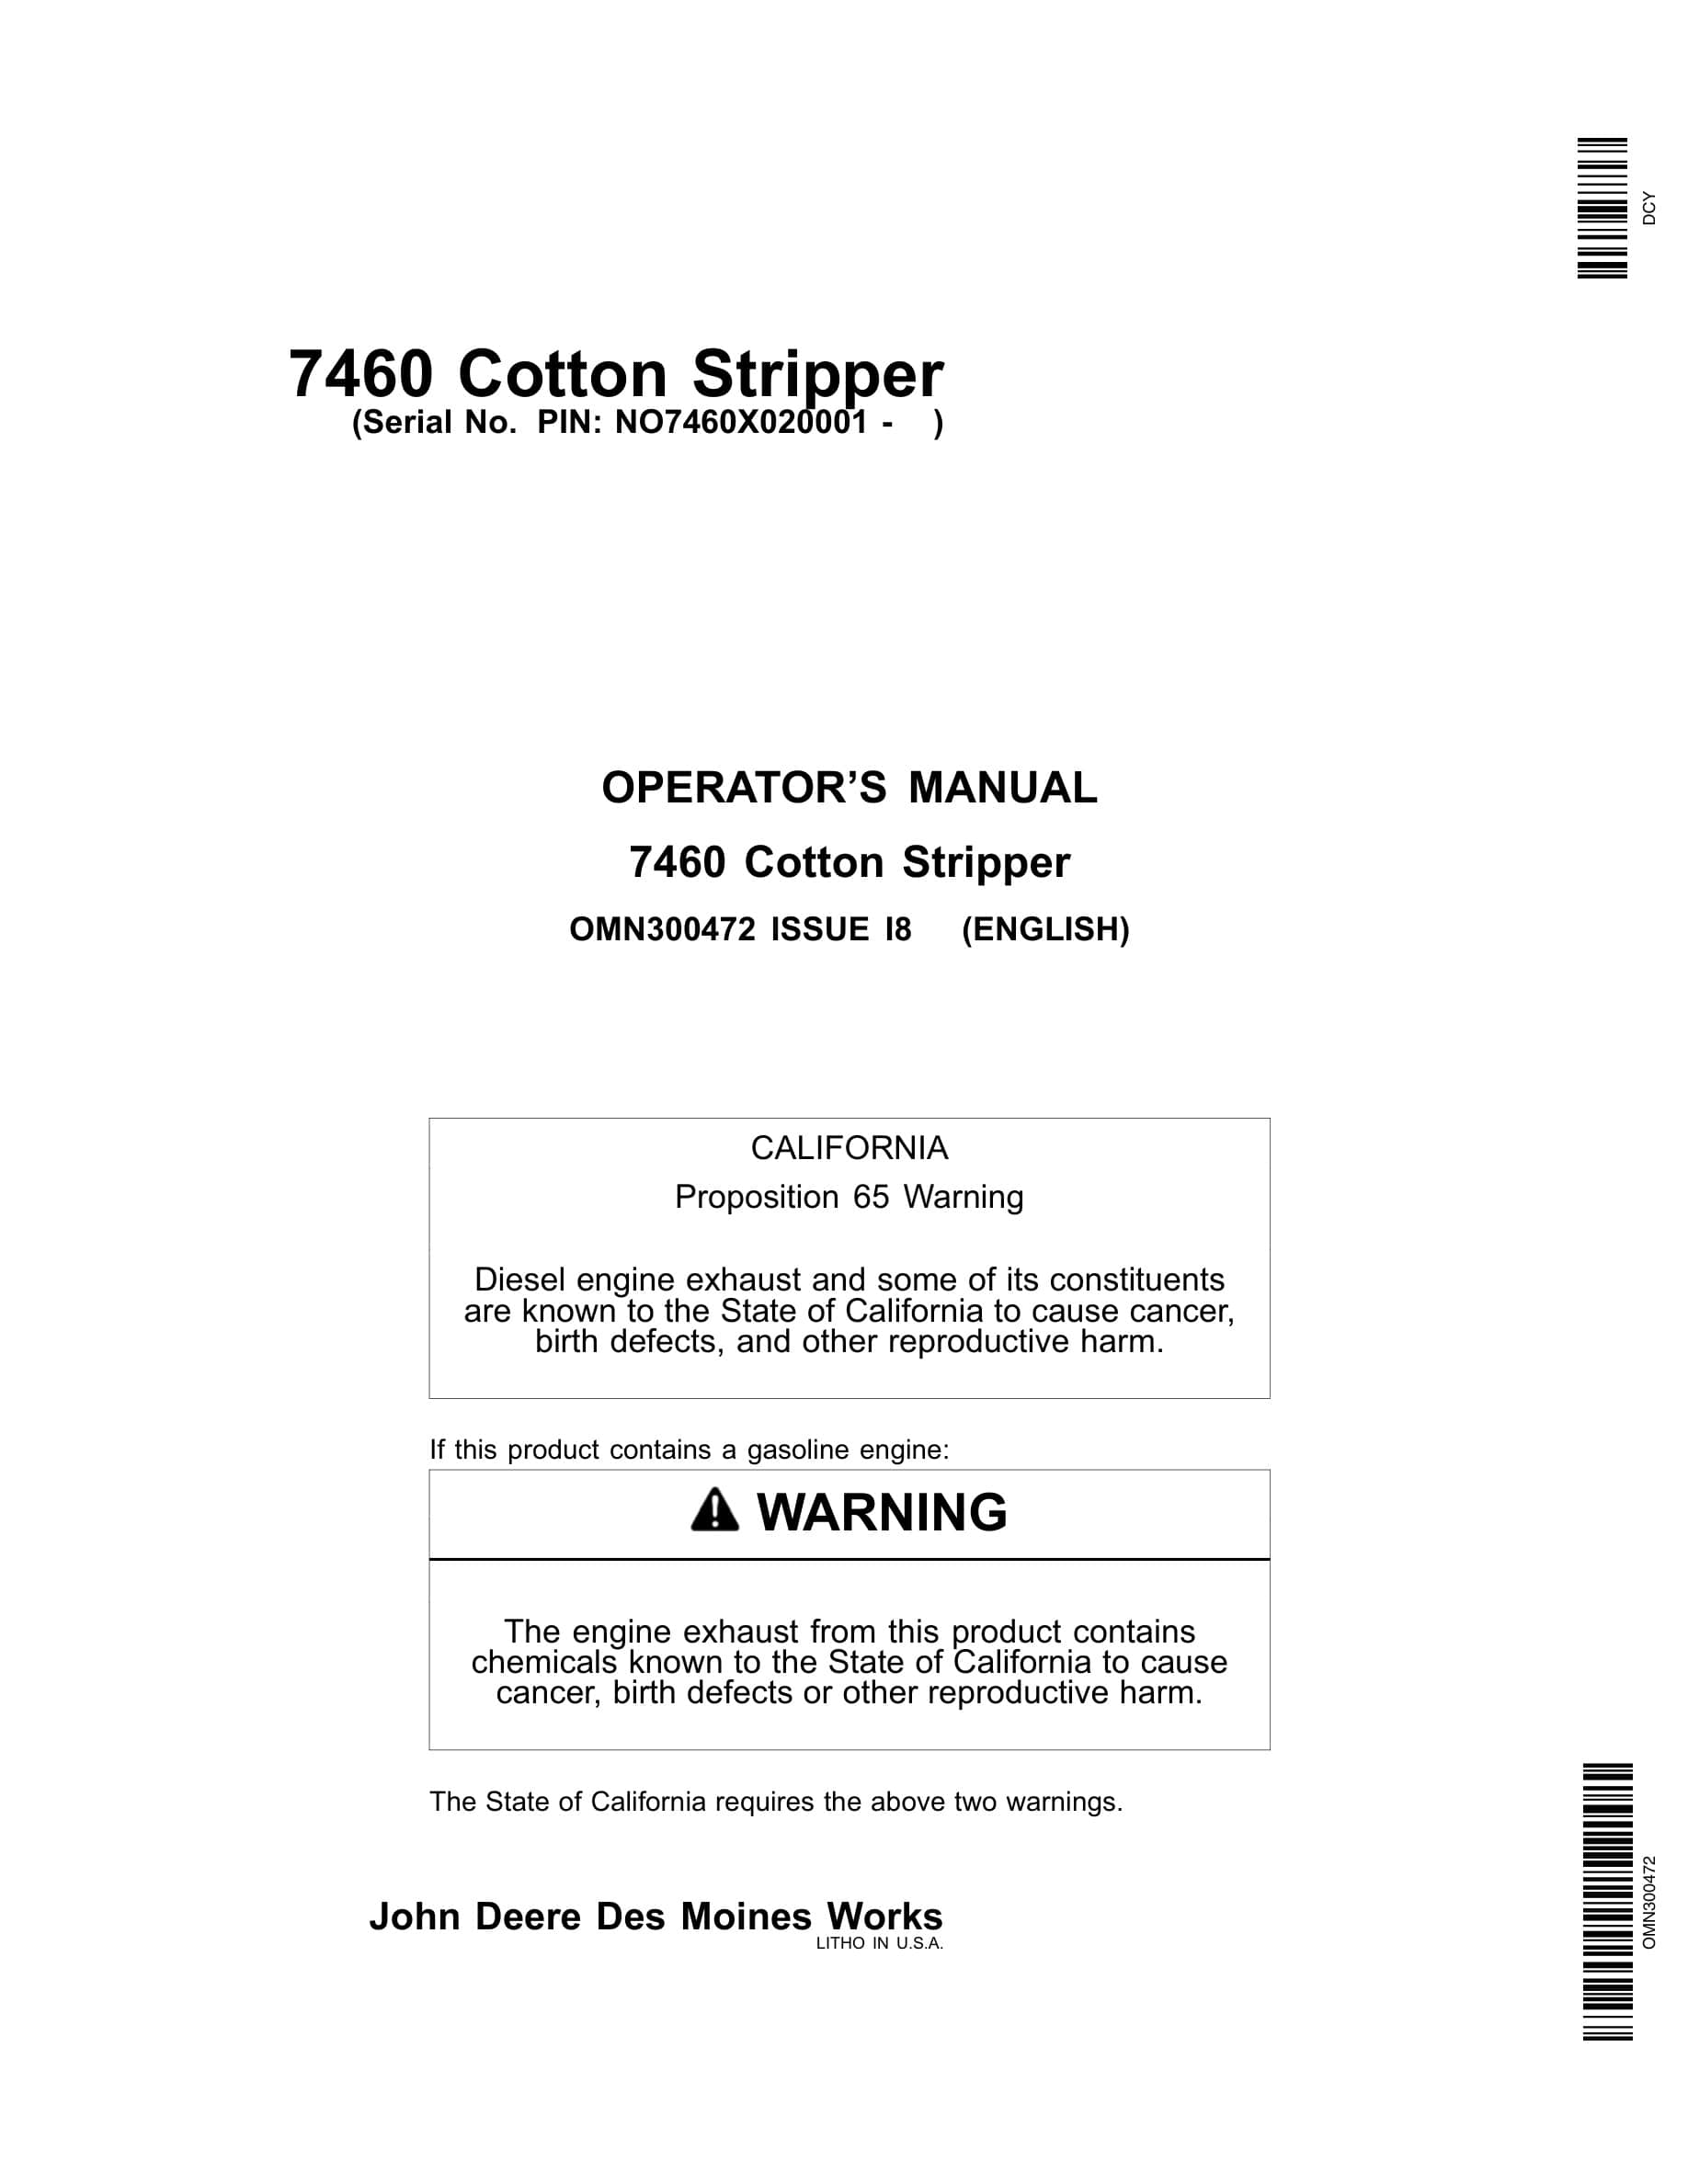 John Deere 7460 Cotton Stripper Operator Manual OMN300472-1